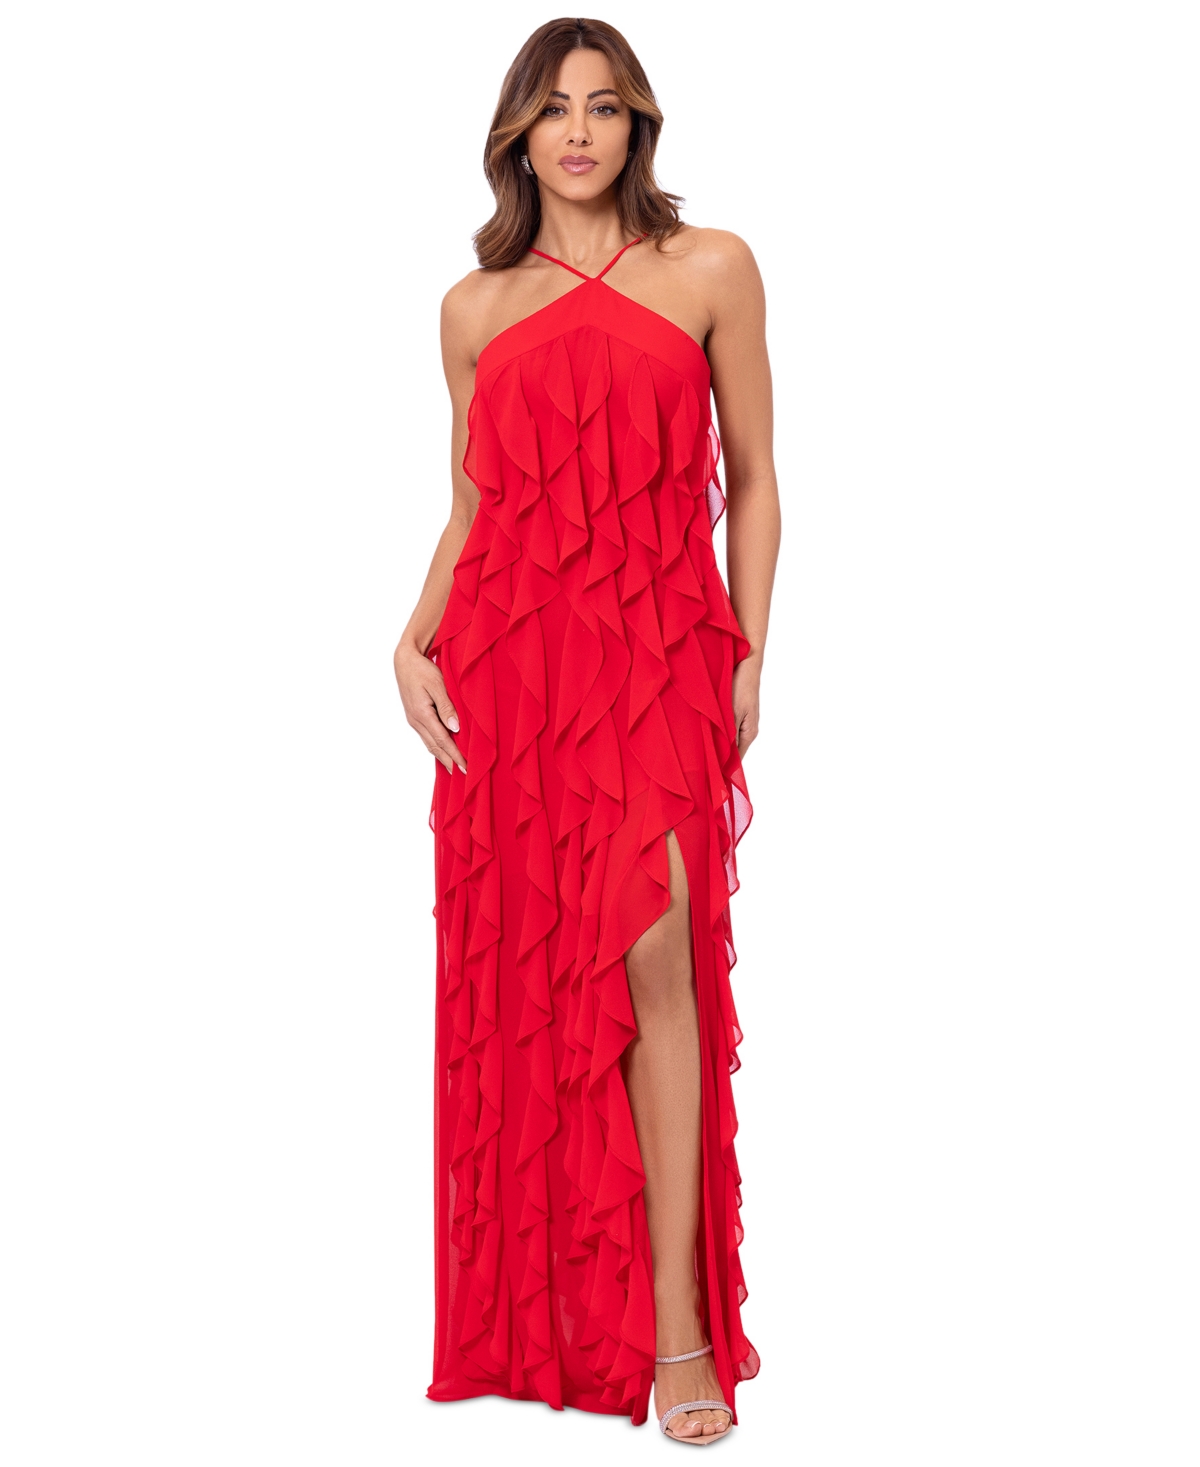 Women's Ruffled Halter Gown - Red